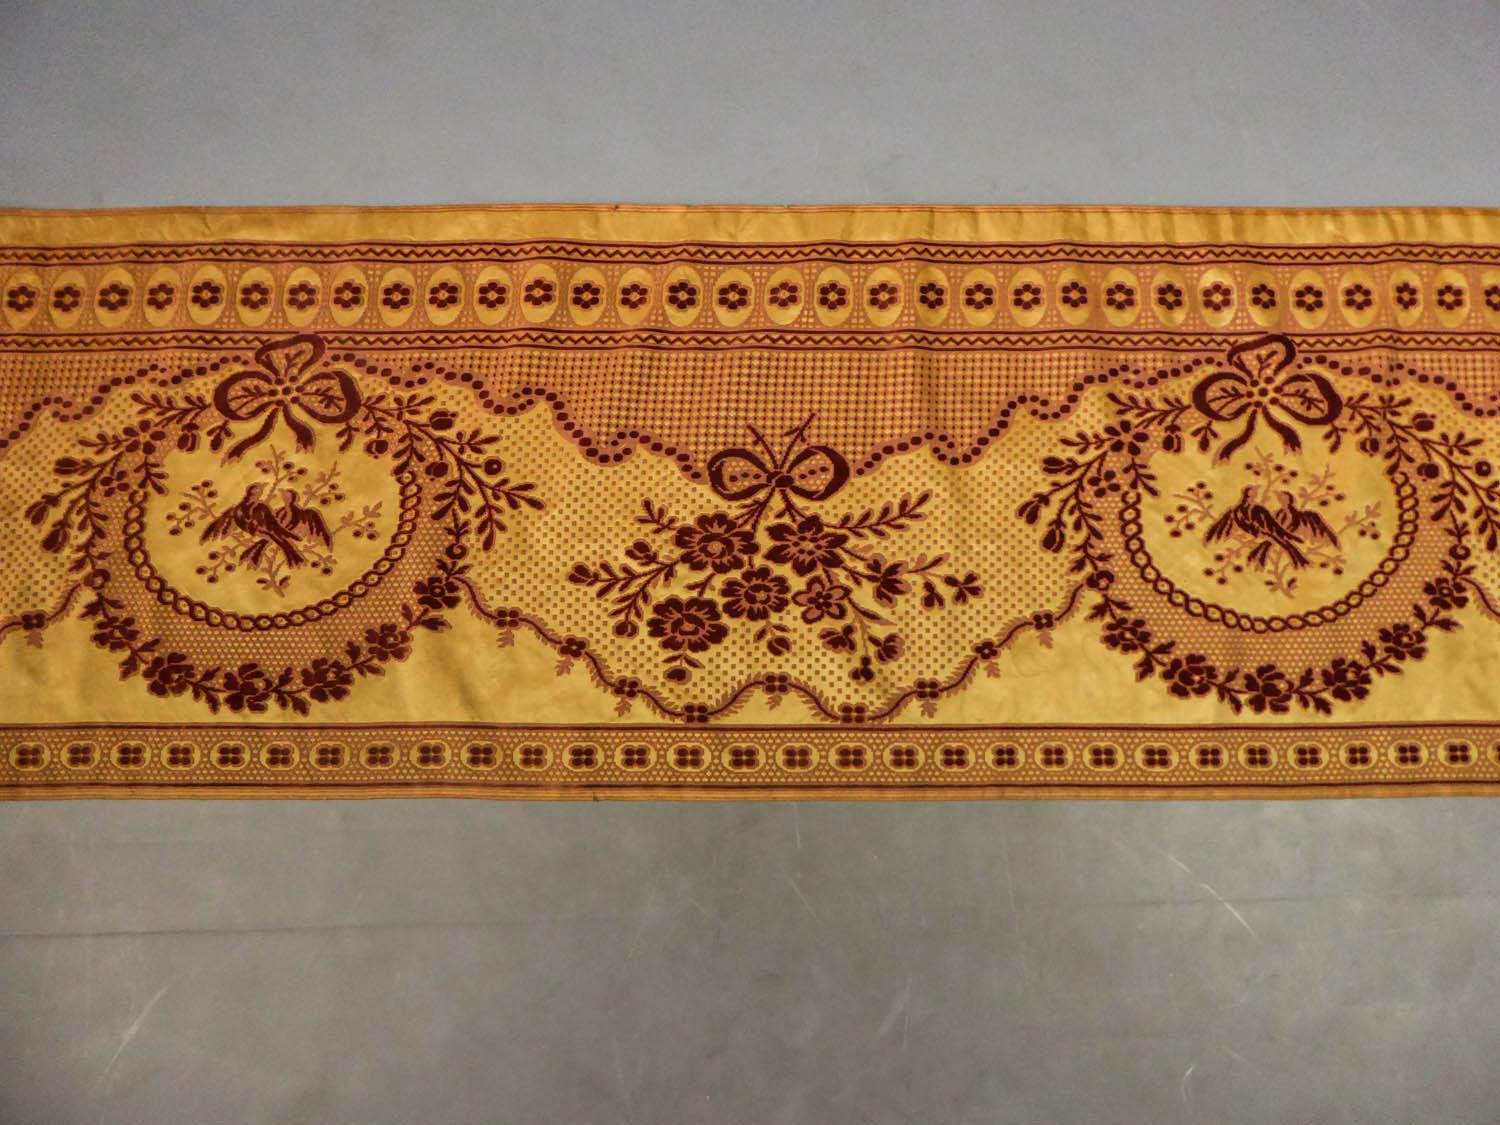 8 meters of Border in chiseled velvet - Late 18th century France For Sale 10